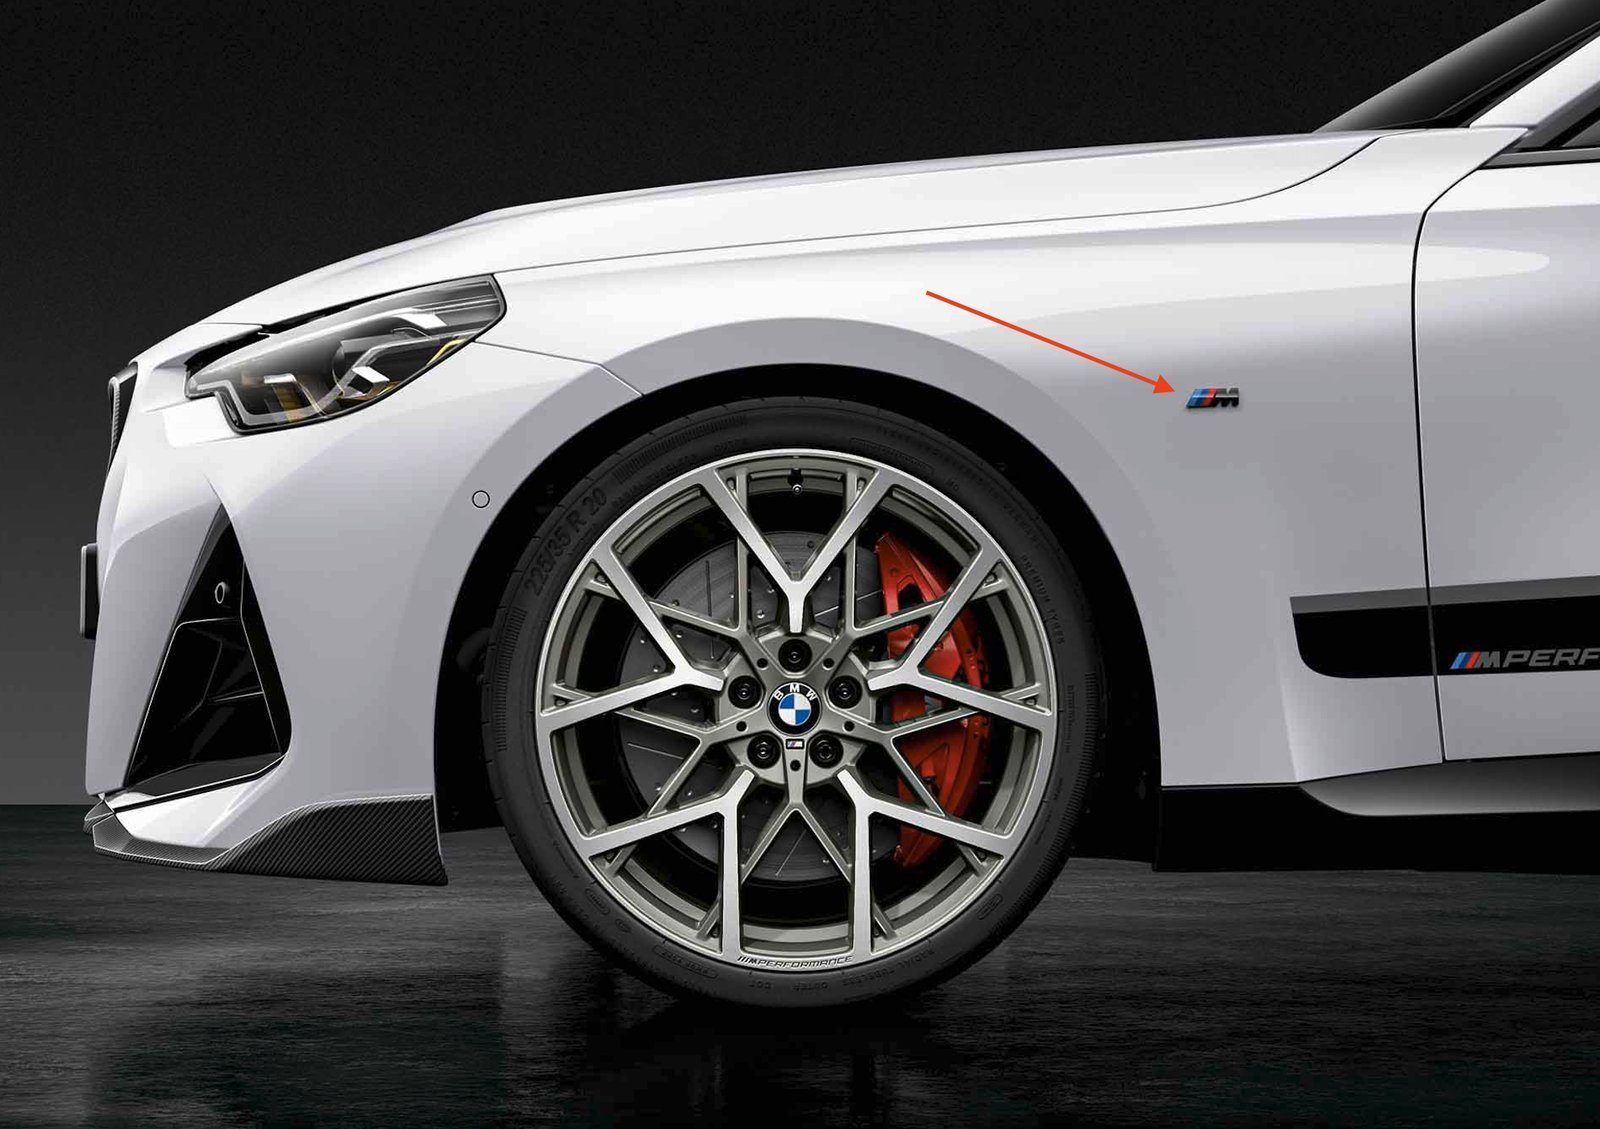 BMW-Originalteile, Emblem 50 Jahre M Frontklappe Motorhaube